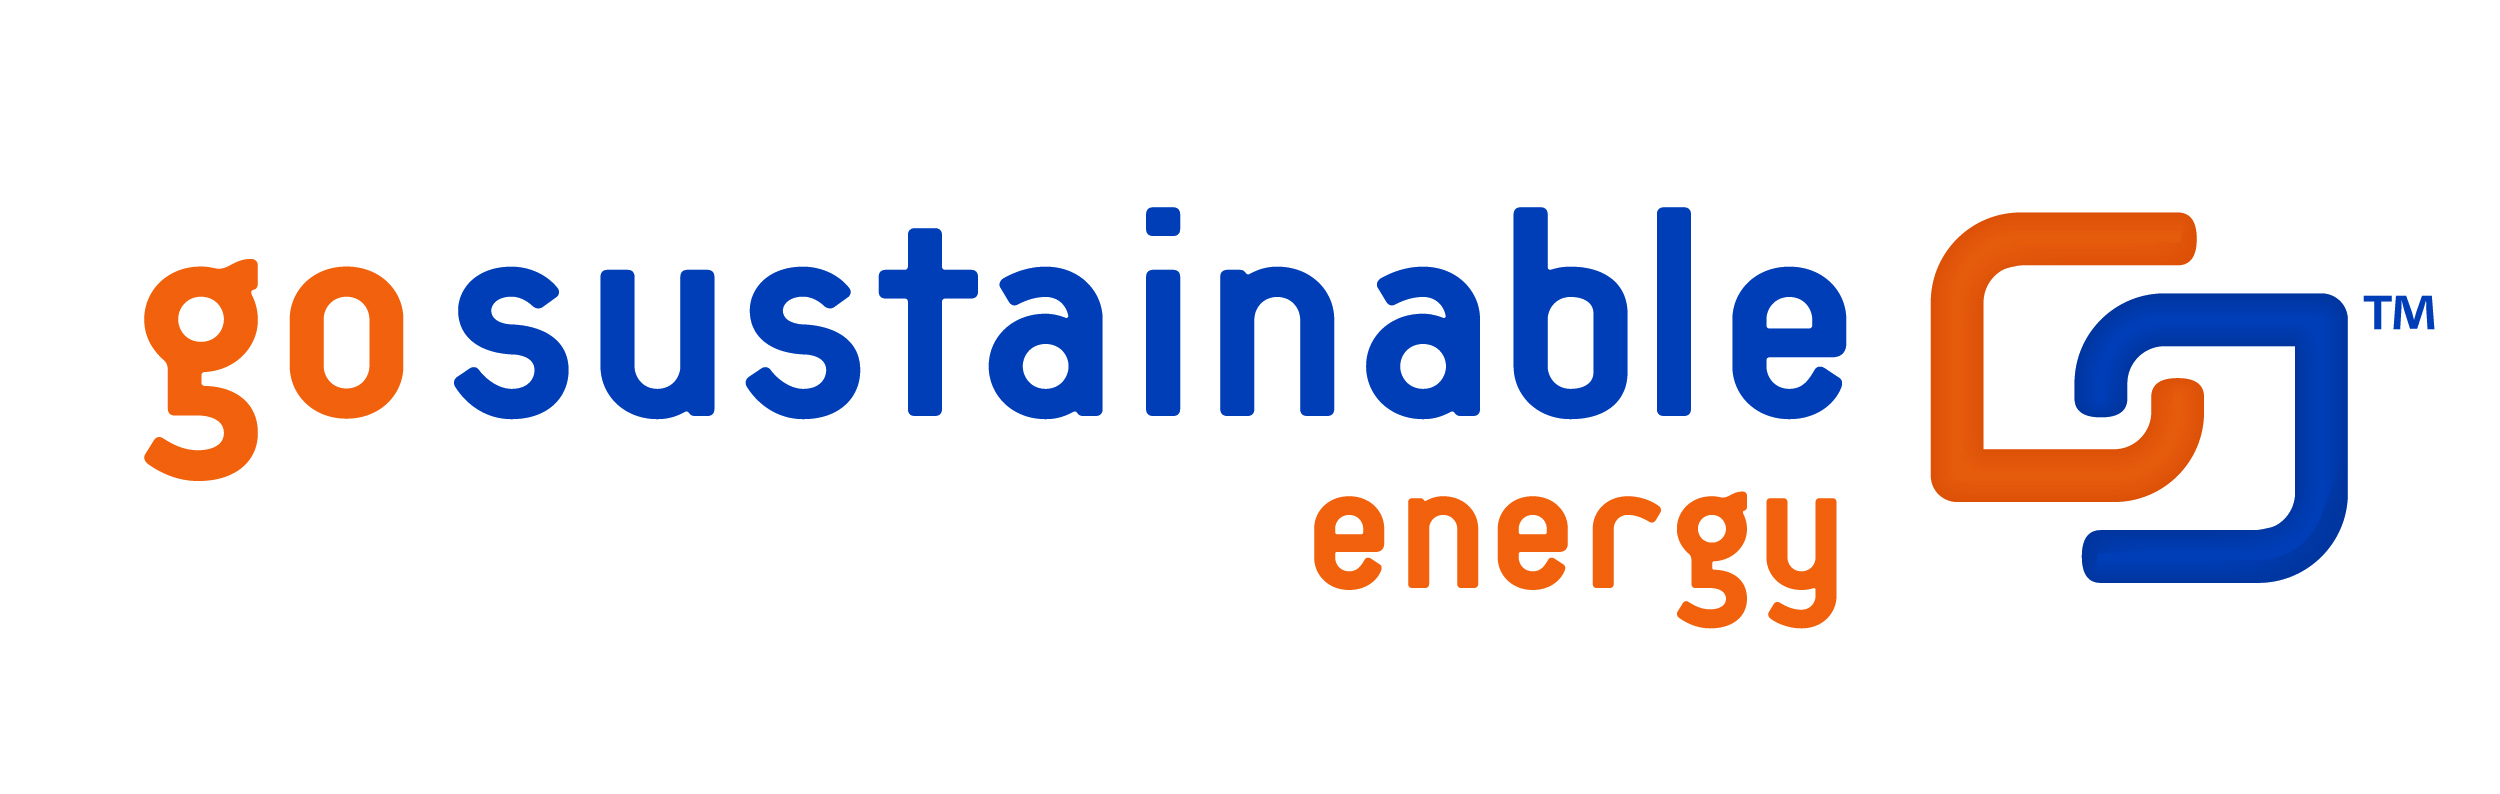 Go Sustainable Energy, LLC 